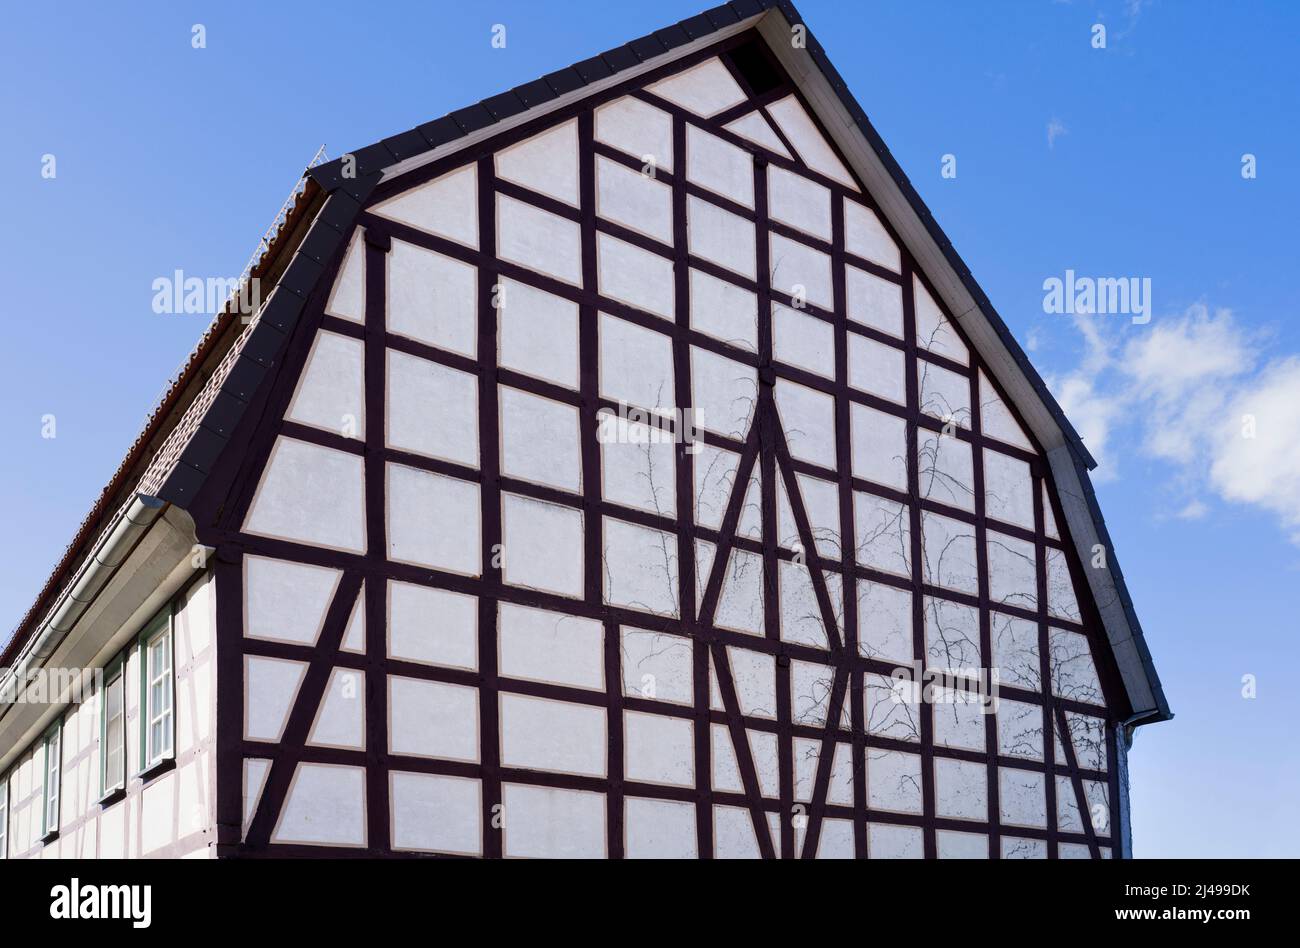 Half-timbered house facade, Germany, Europe Stock Photo